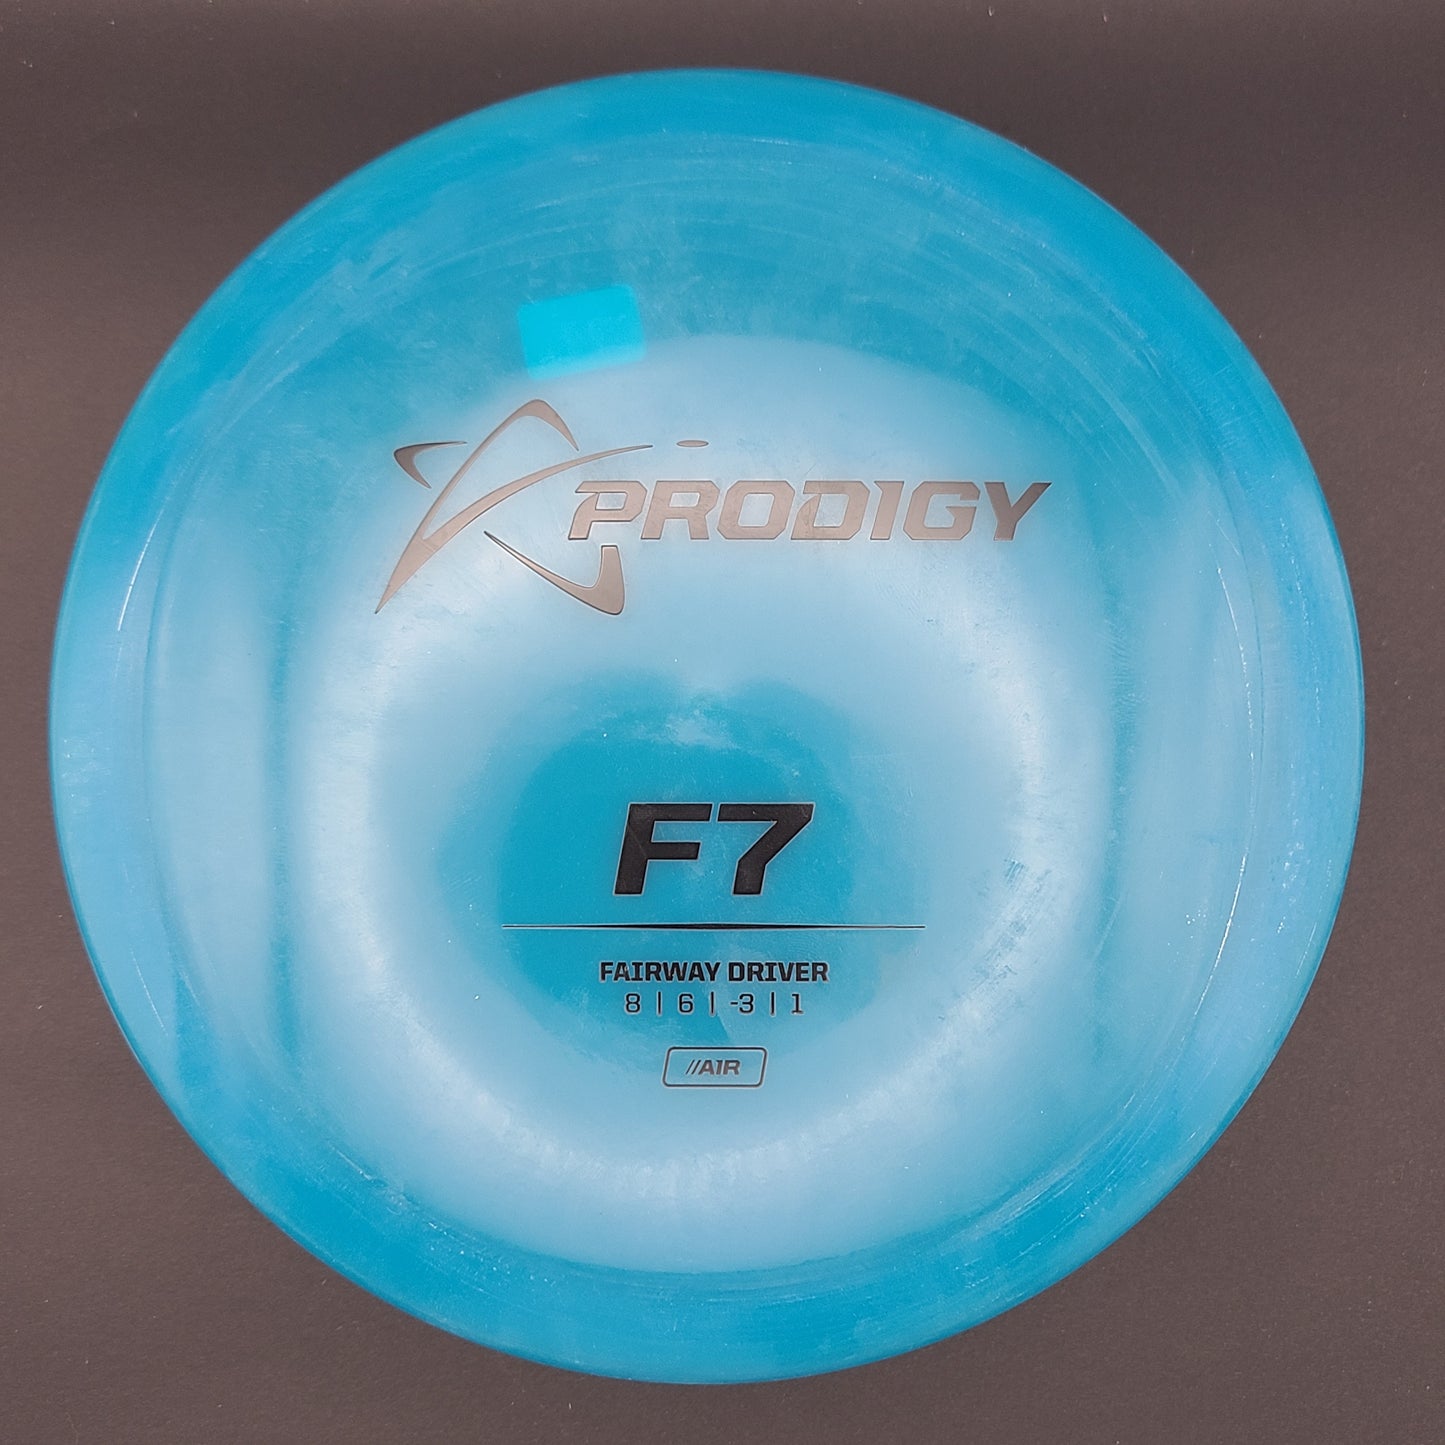 Prodigy - F7 - Air